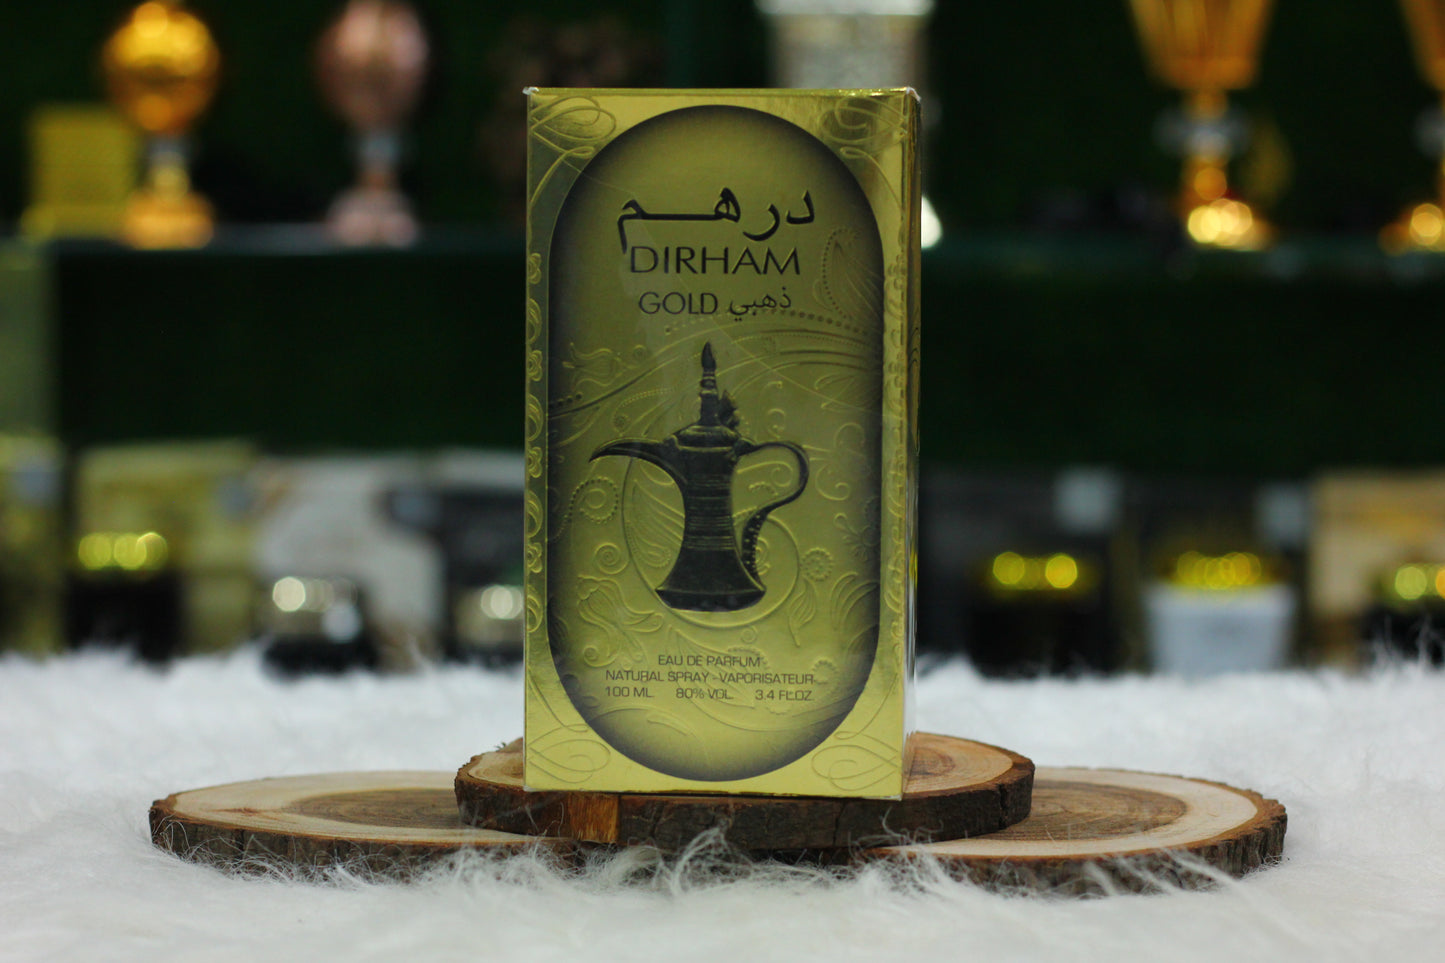 Dhiram Gold Perfume - A Luxurious Fragrance